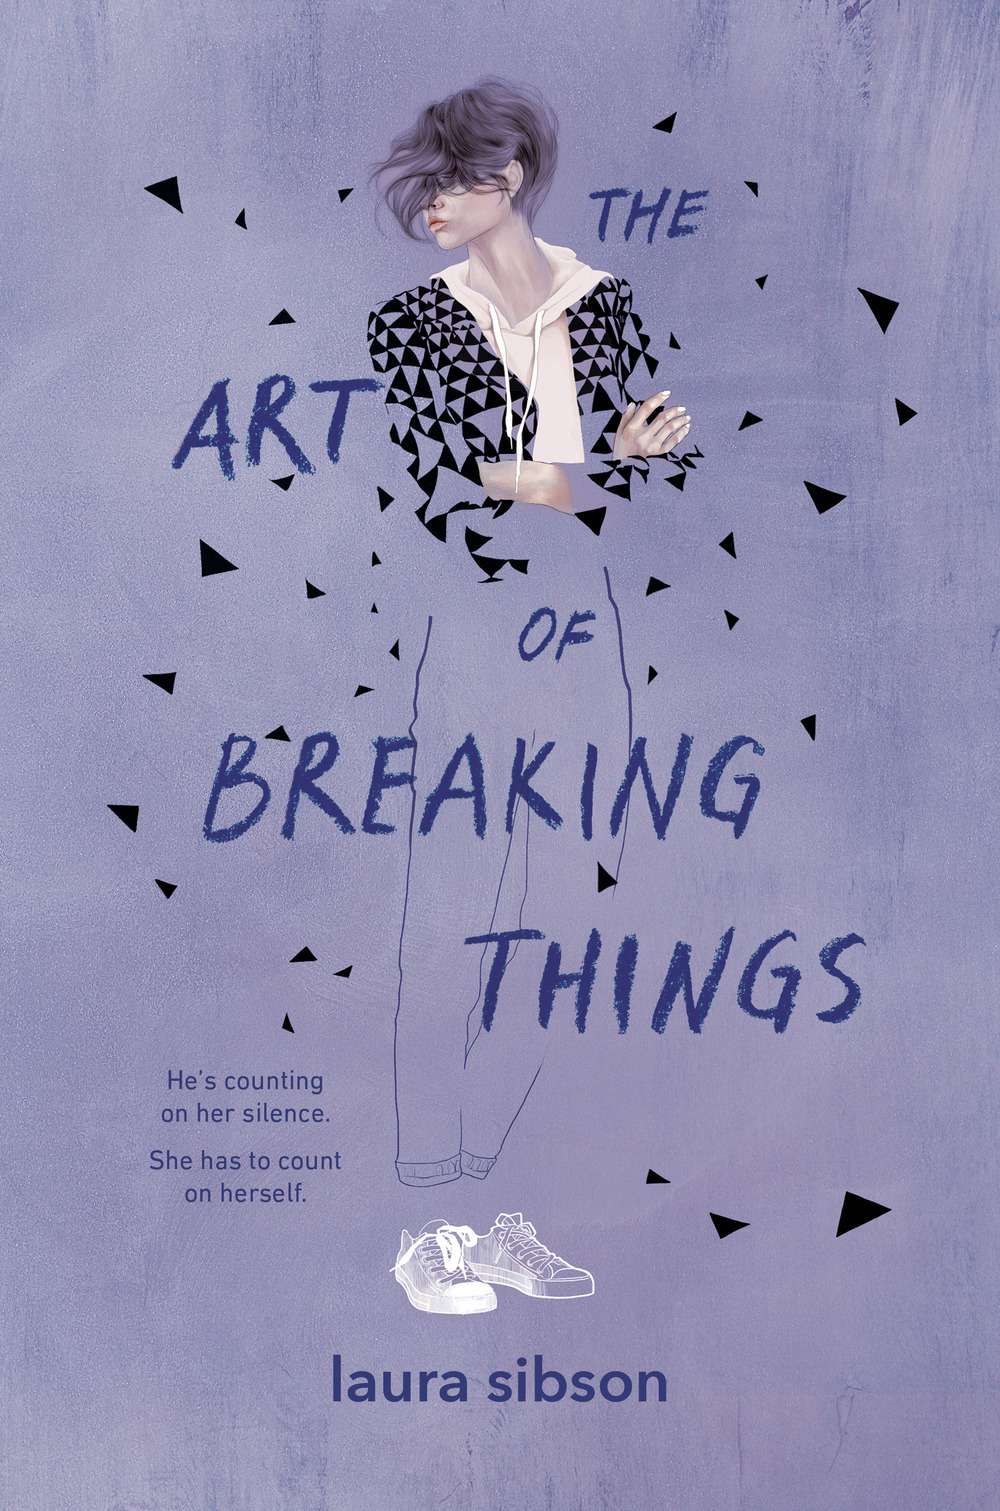 The Art of Breaking Things by Laura Sibson